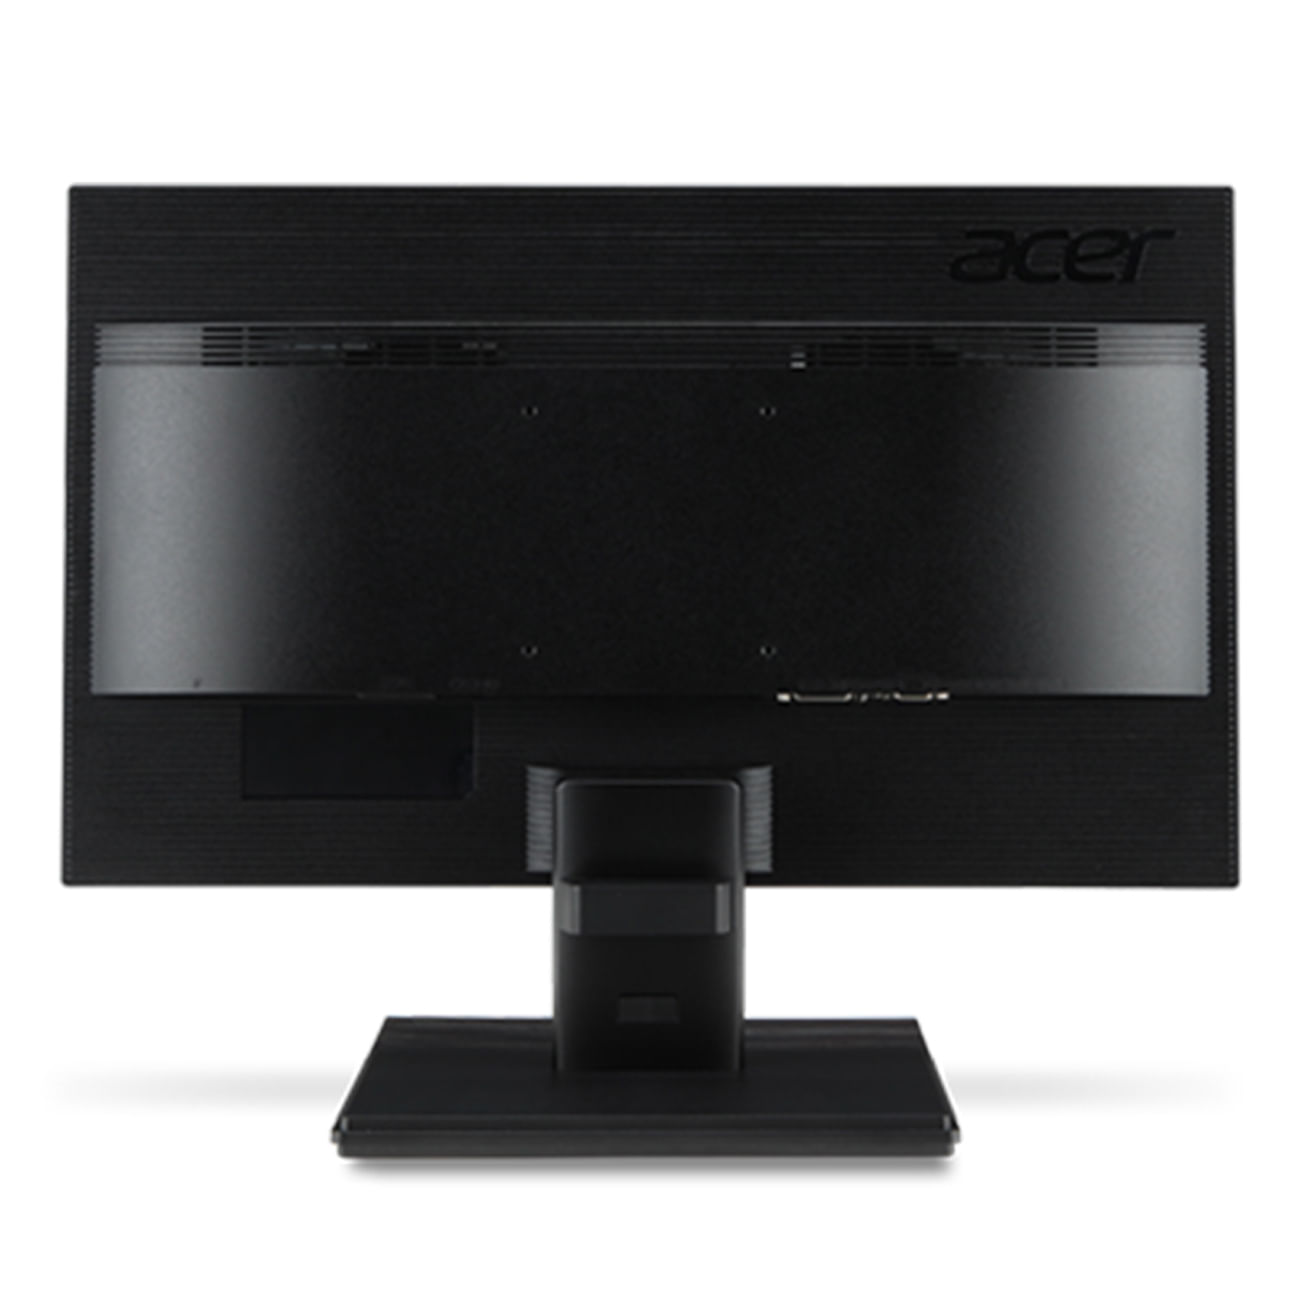 Monitor Acer V226hql 22 Led 5ms 1920x1080 Fhd Hdmi Vga